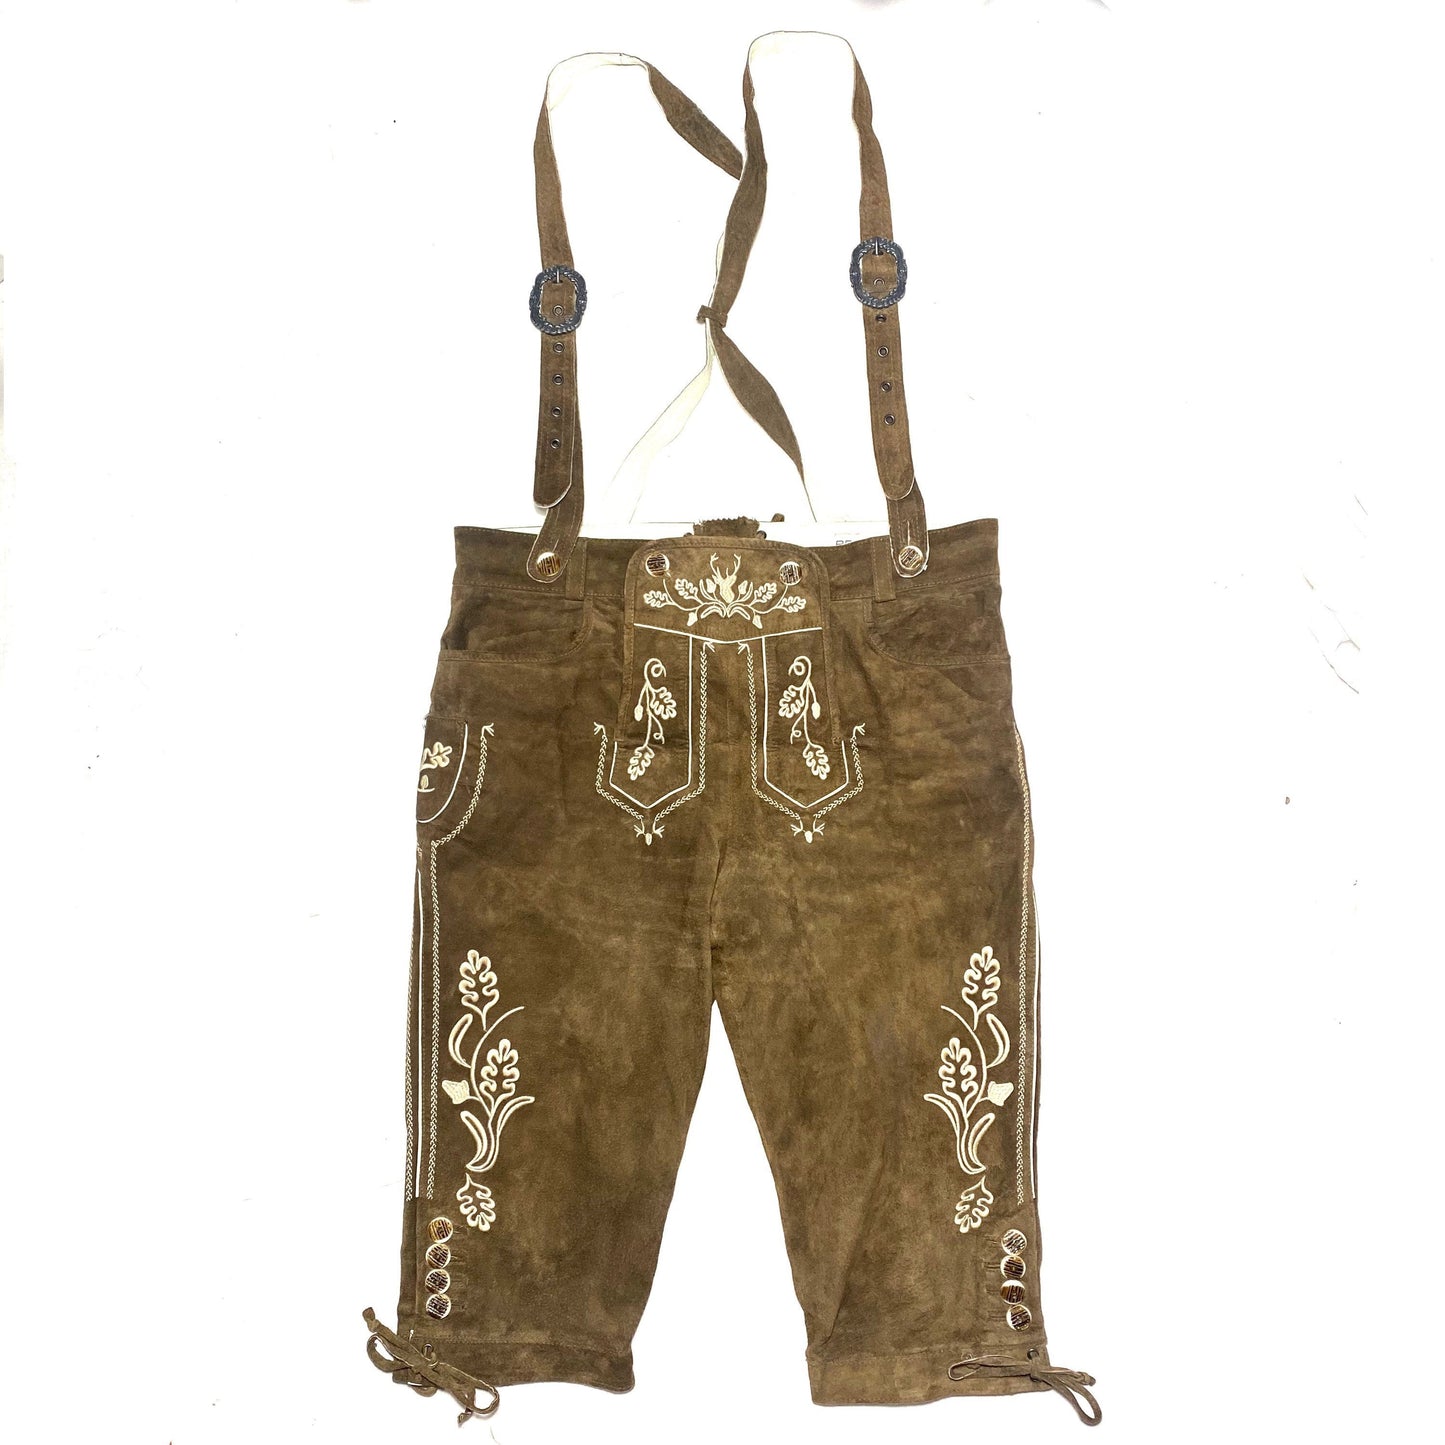 Reward trachten suede leather trousers, traditional German / Bavarian oktoberfest plus fours shorts, size M